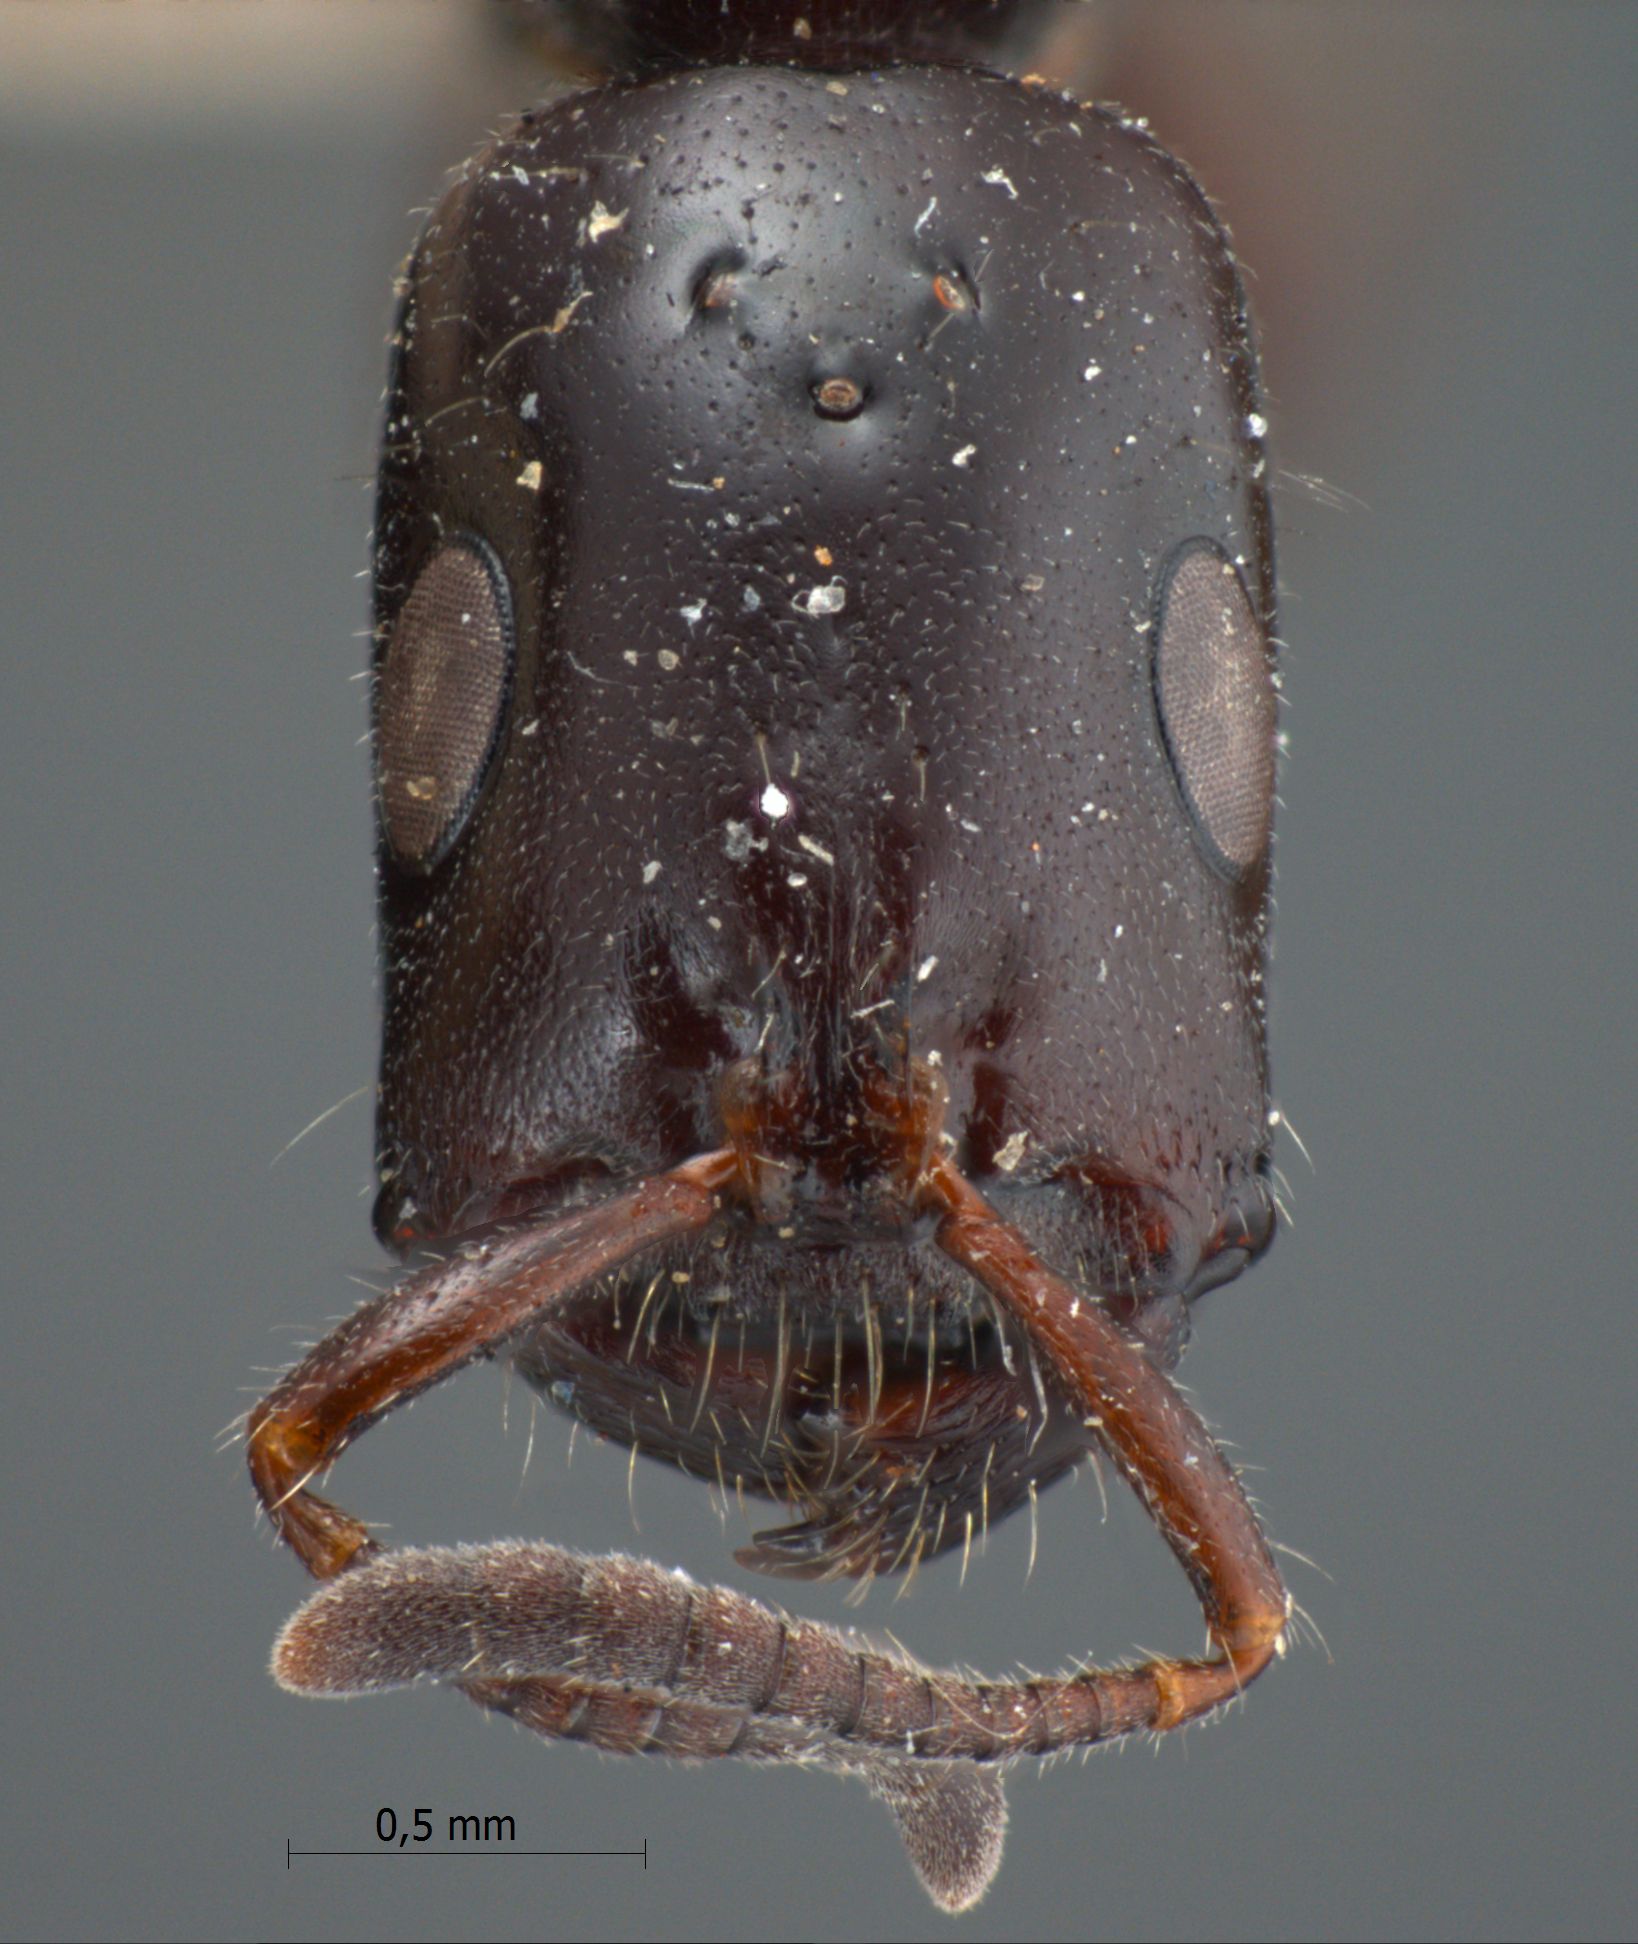 Tetraponera nigra queen frontal